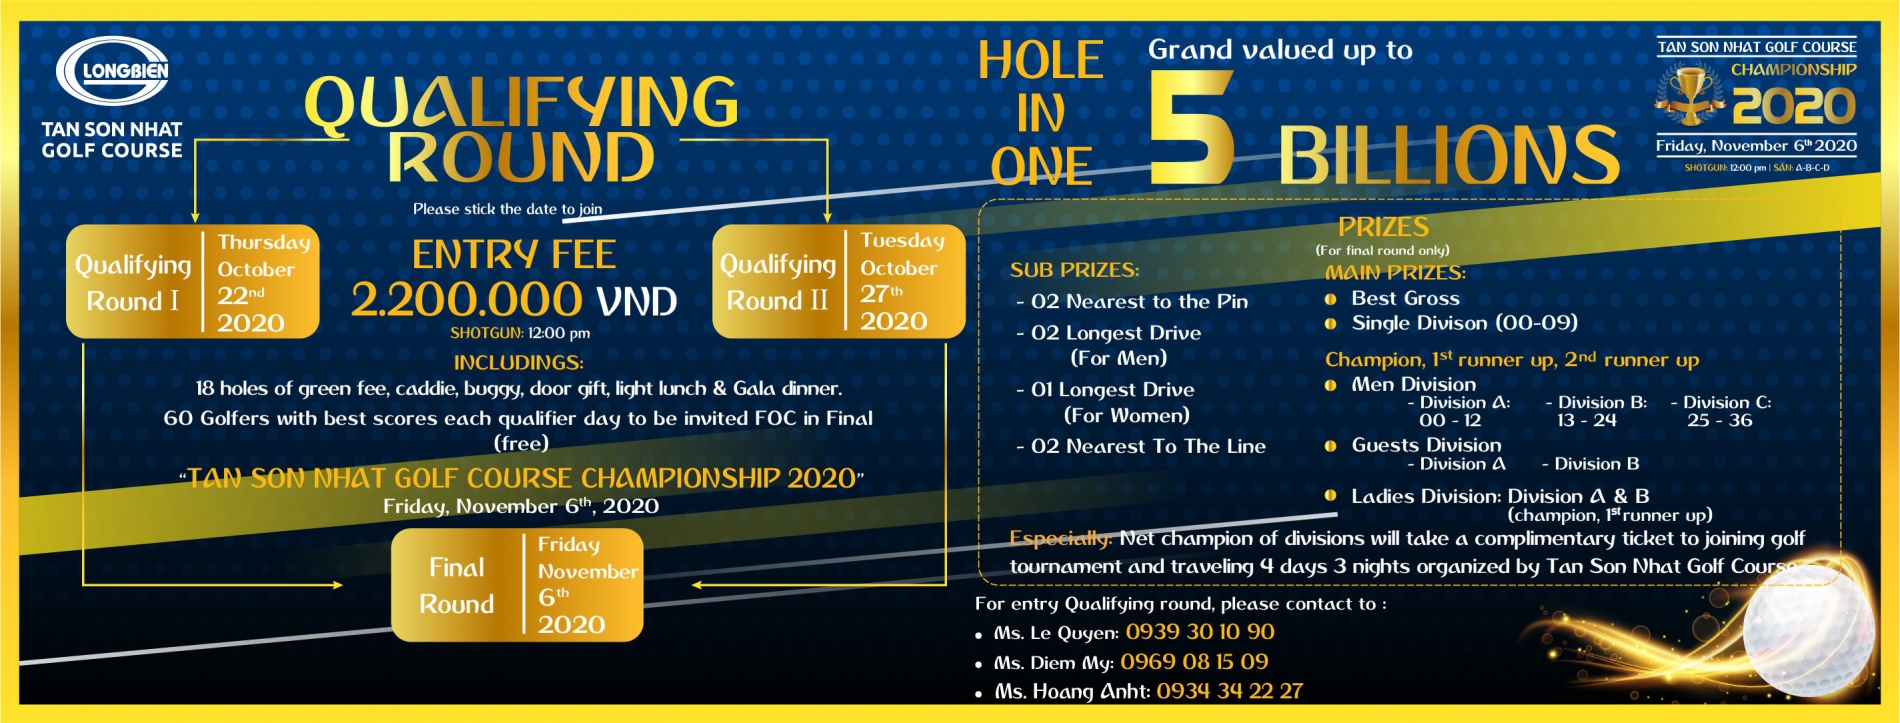 Tan-son-nhat-golf-course-championship-2020-chinh-thuc-cong-bo-ngay-tro-lai